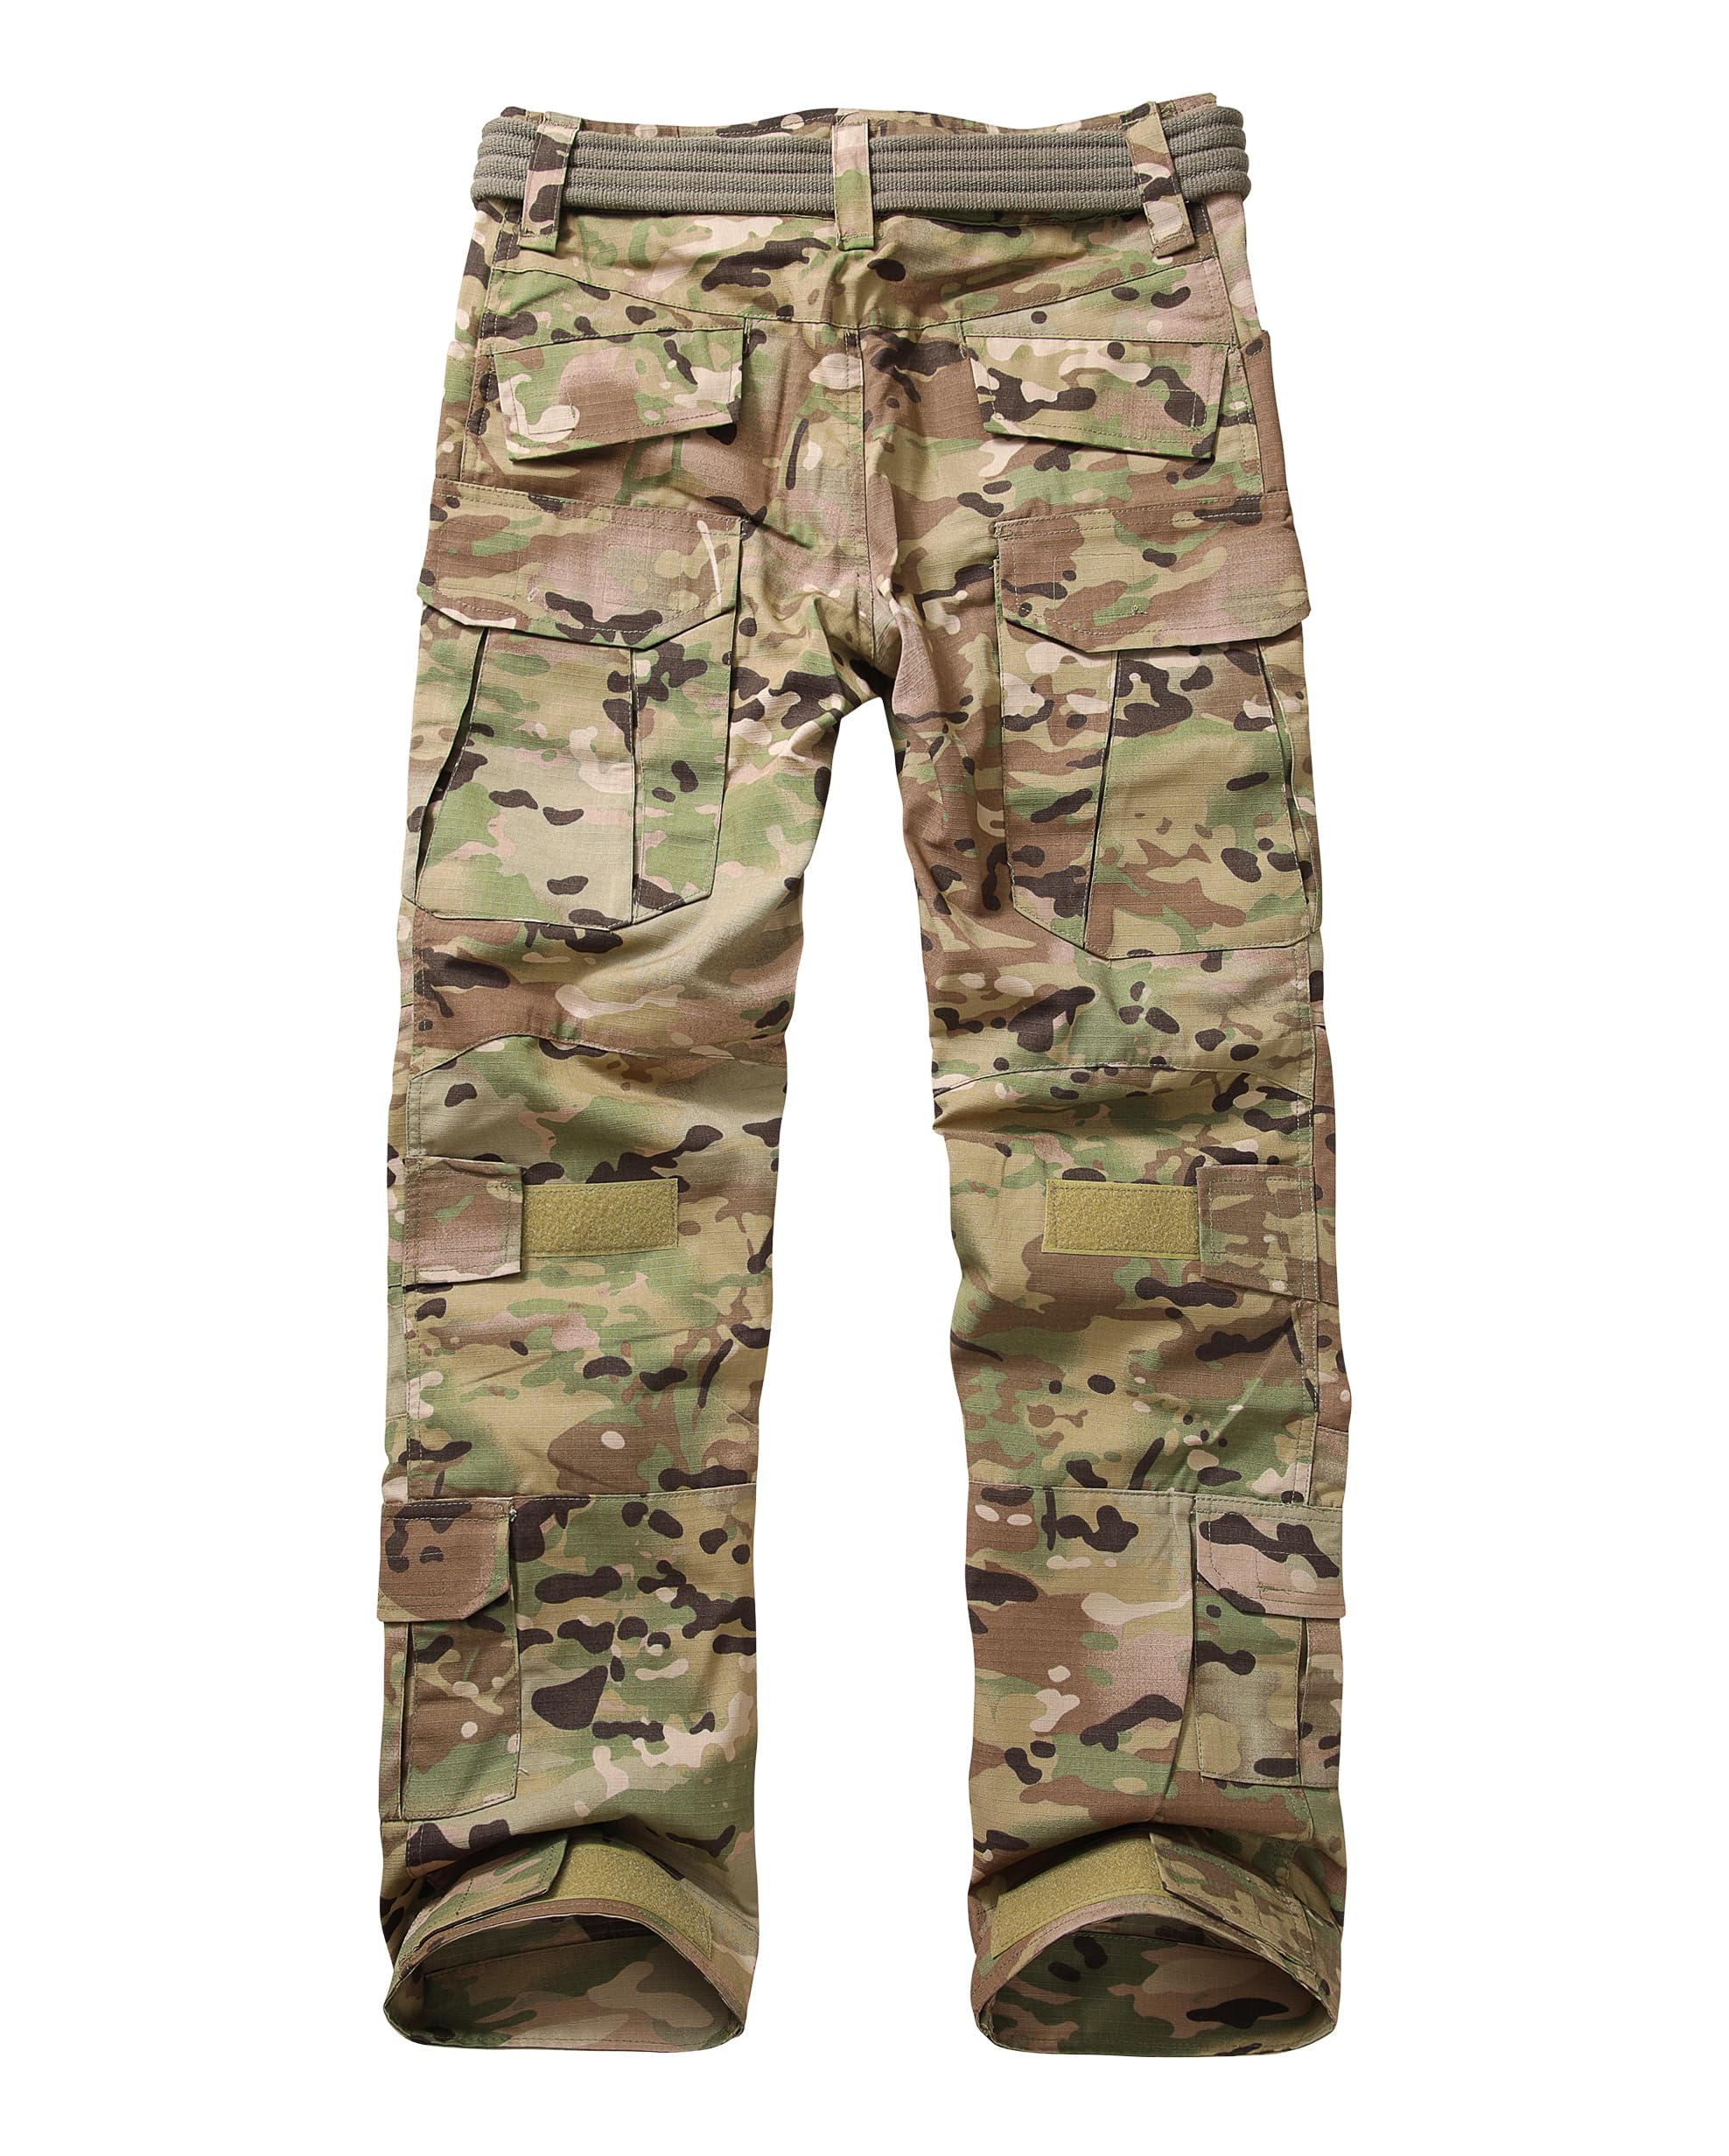 OCANXUE Men's Tactical Pants Camo Cargo Pants Ripstop Work Hiking Pants with 10 Pockets No Belt Size 36